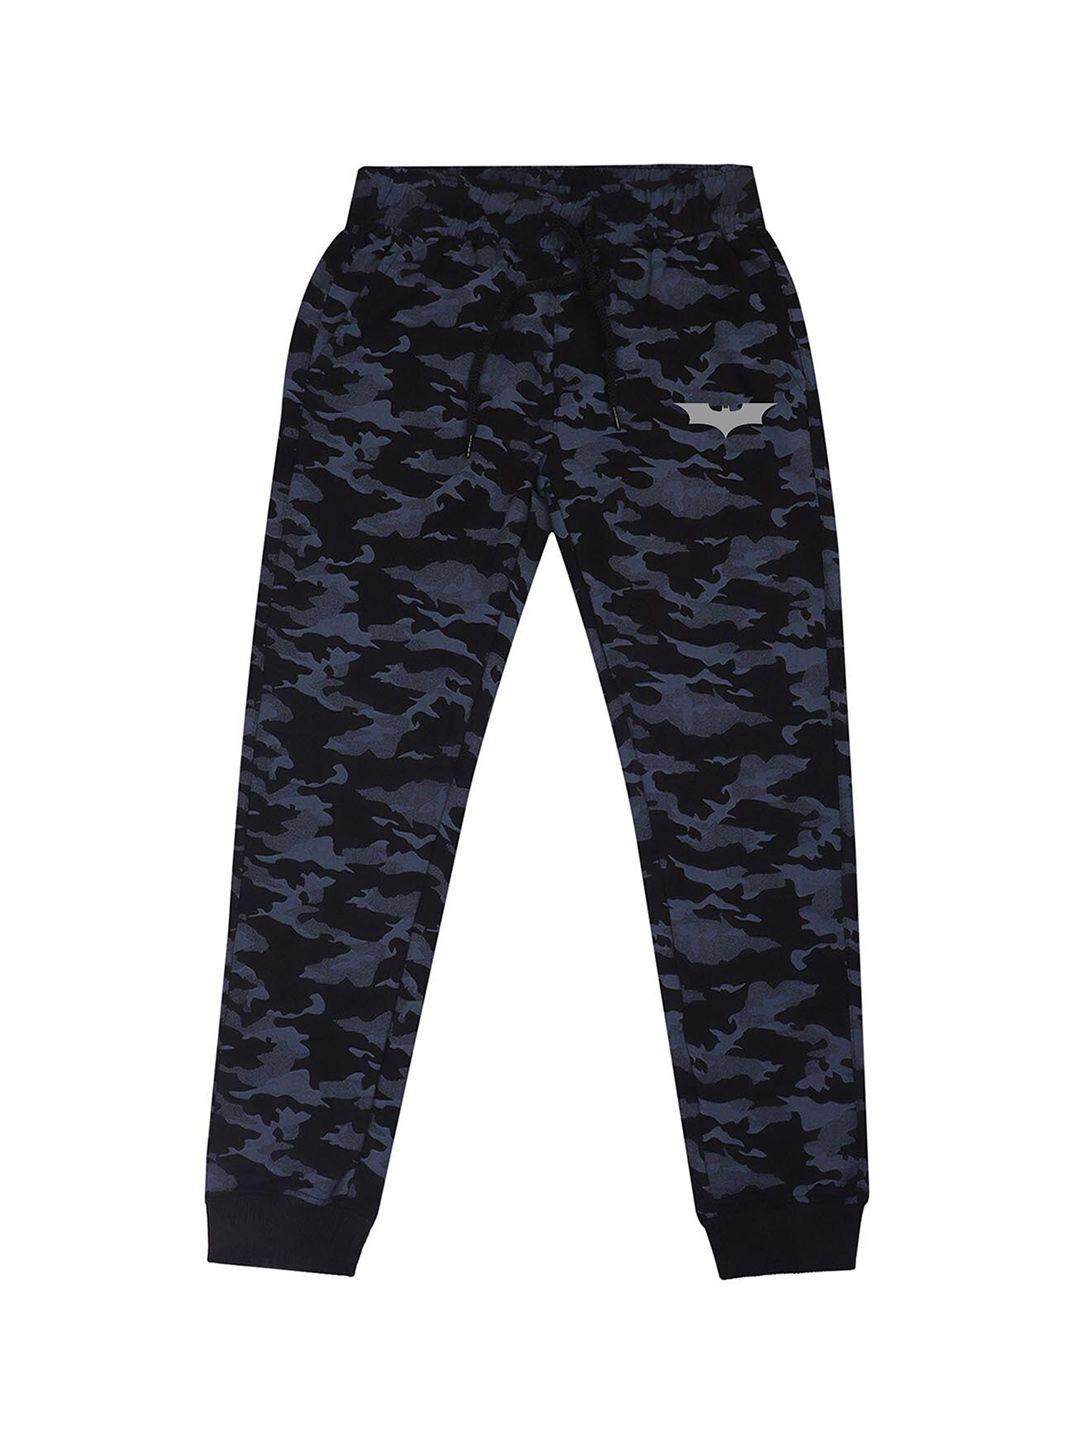 batman boys navy blue & black camouflage printed slim-fit jogger